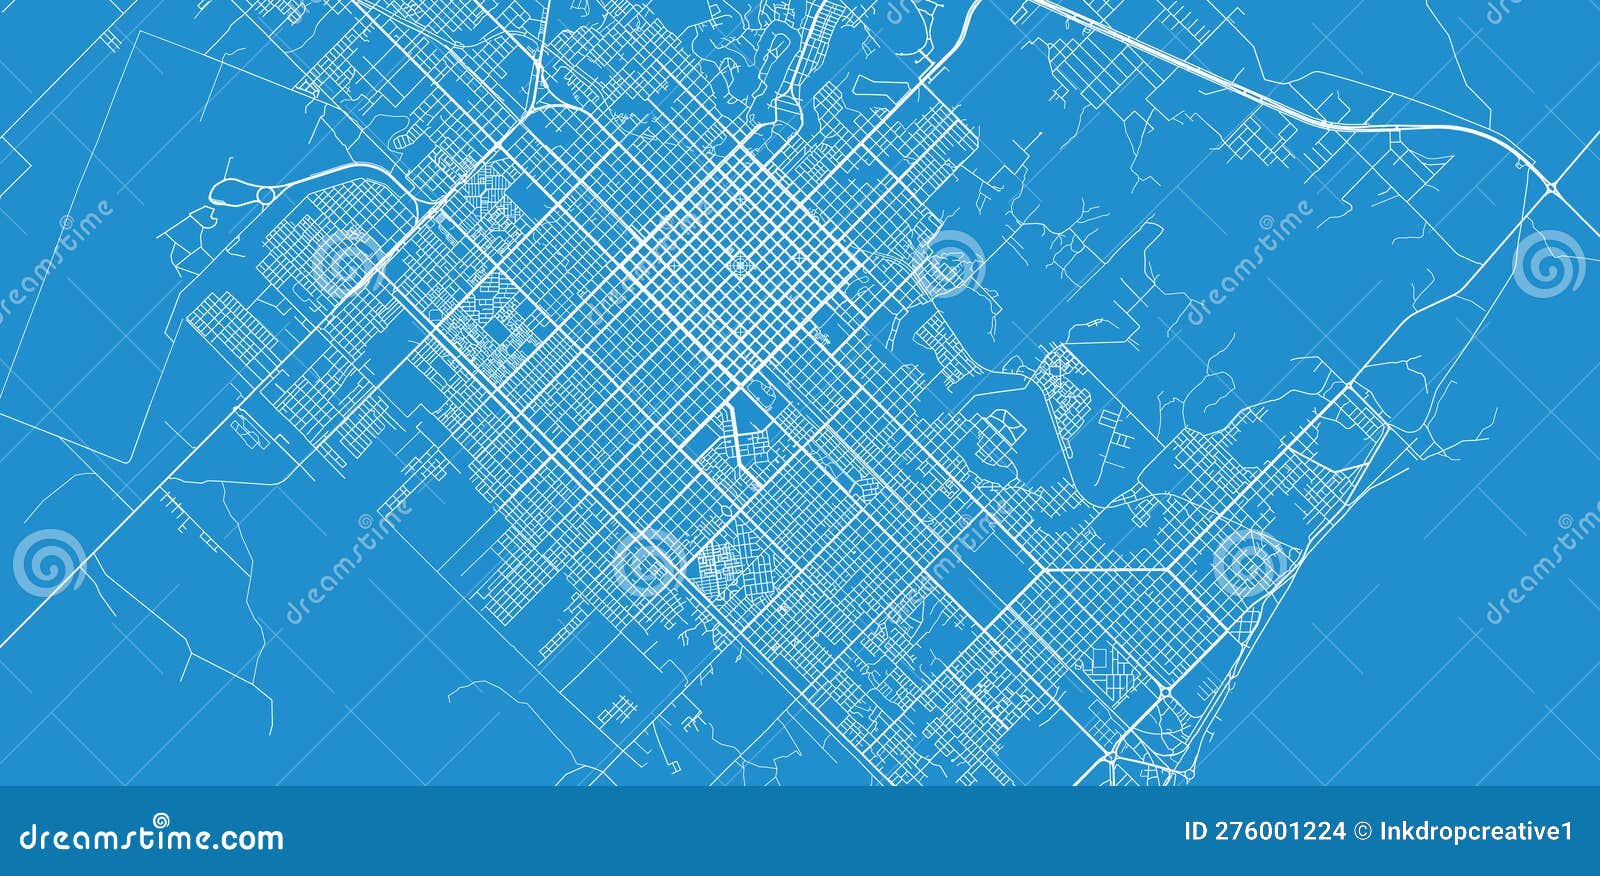 urban  city map of resistencia, argentina